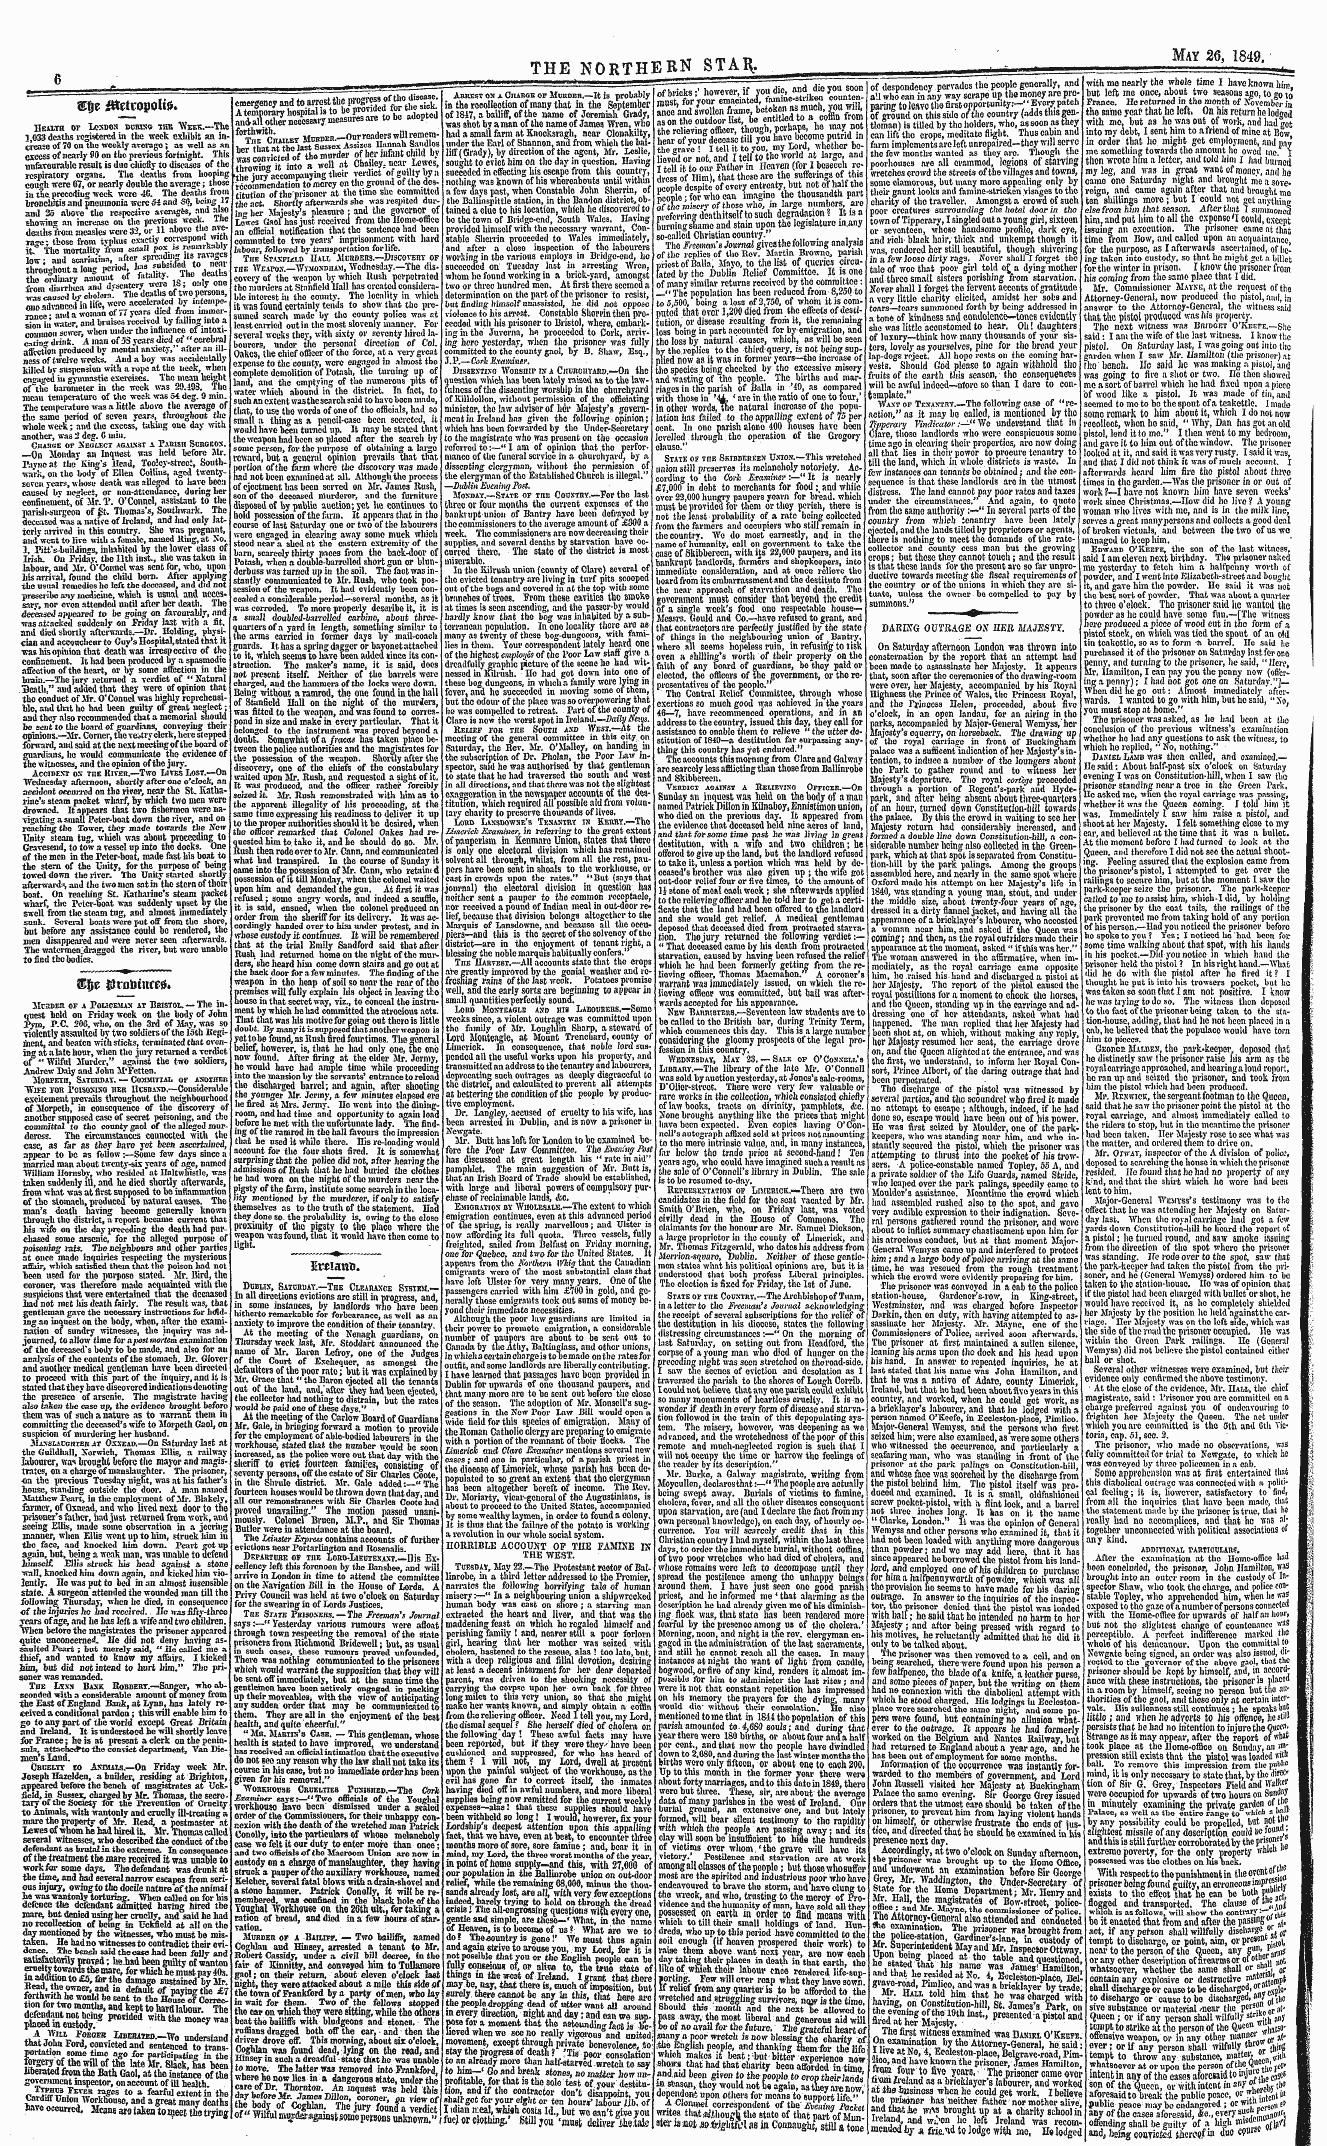 Northern Star (1837-1852): jS F Y, 2nd edition - 3&£!Attti.